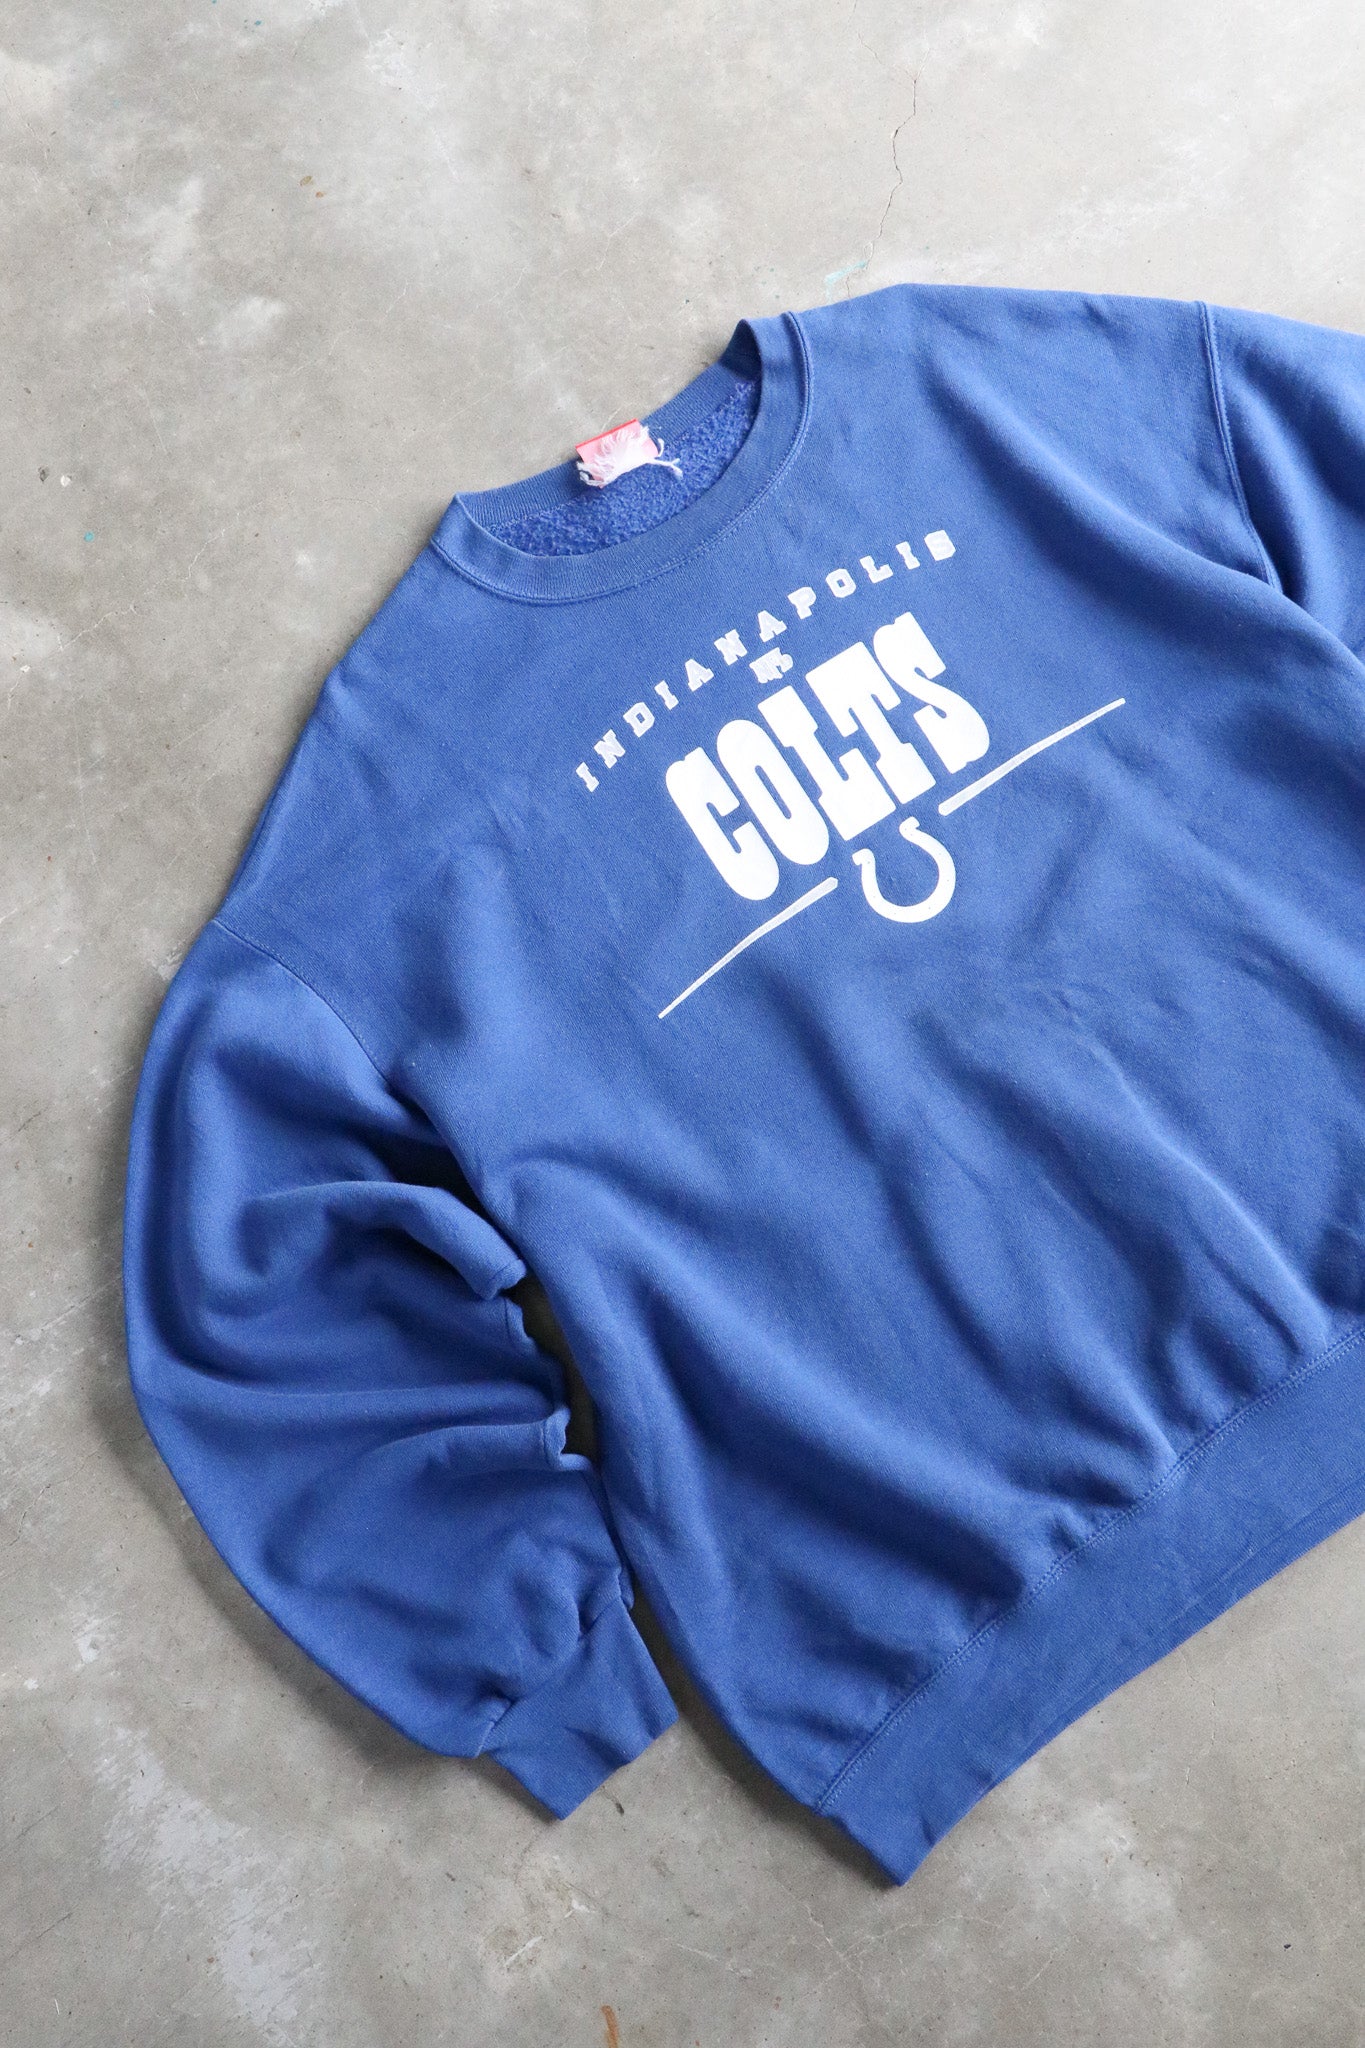 Vintage Colts Sweater XL